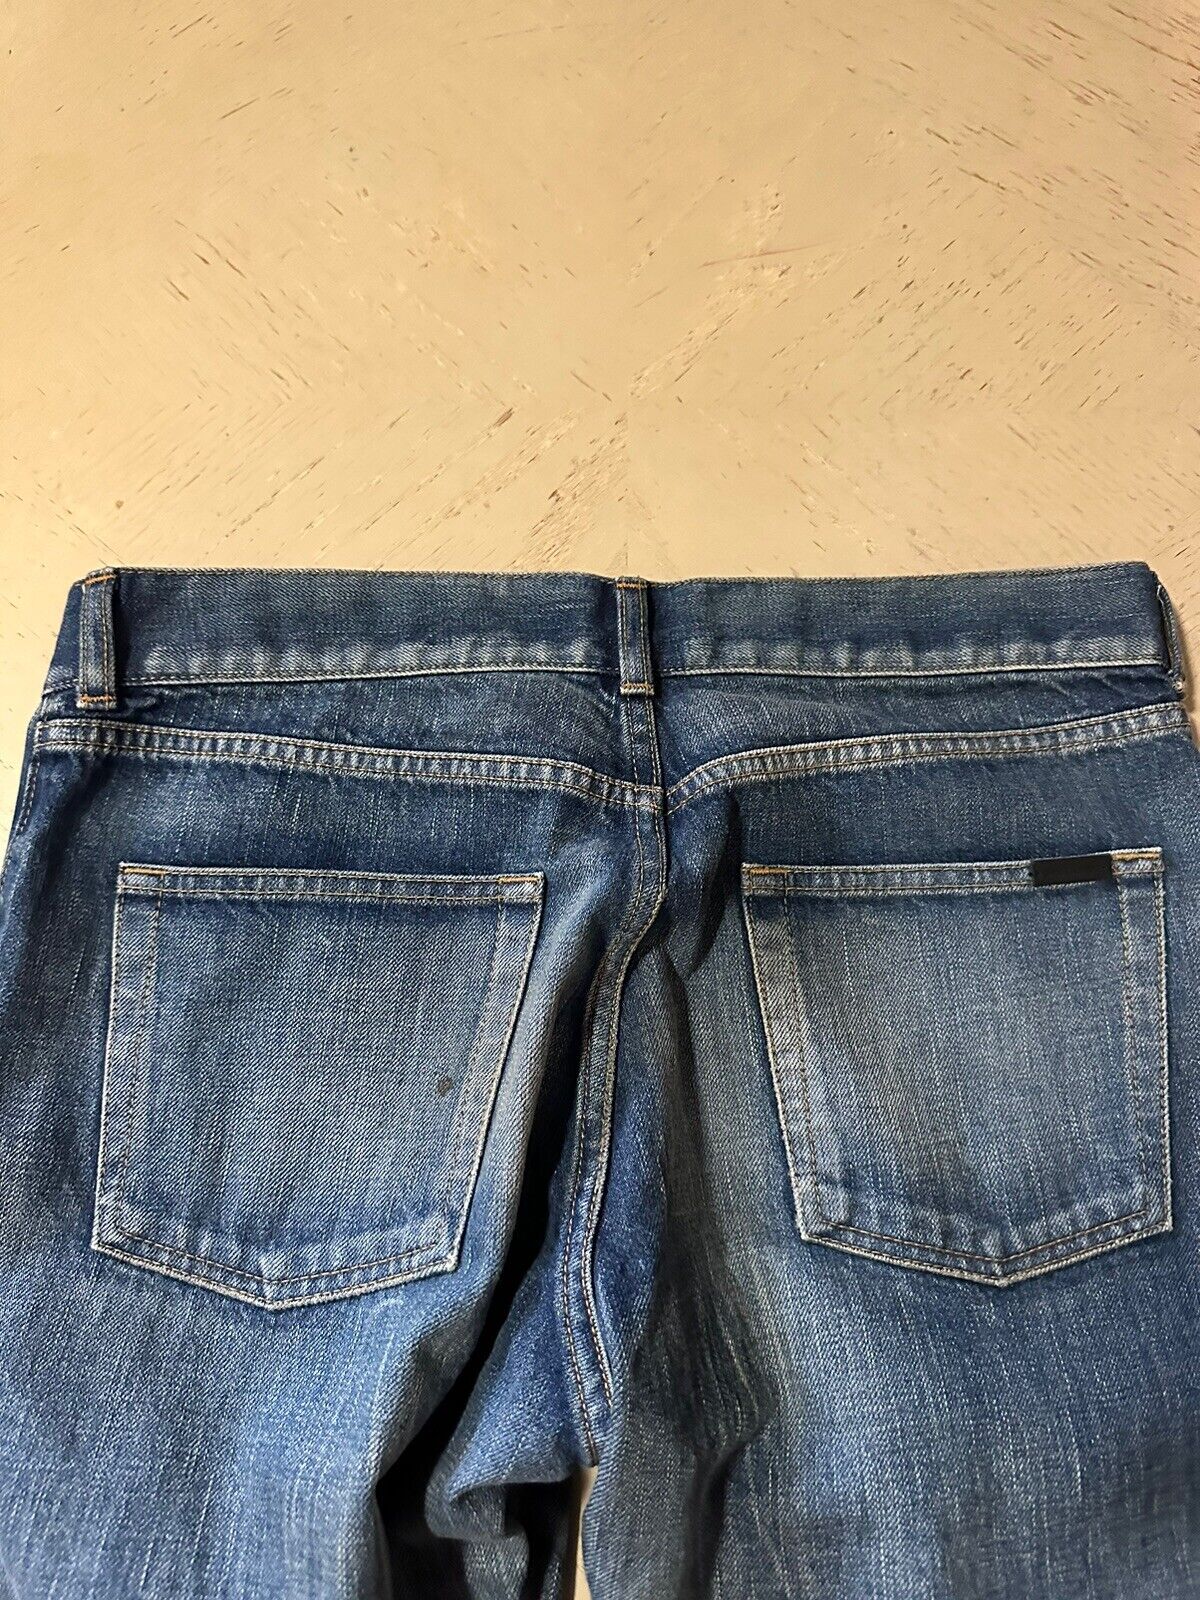 NWT $890 Saint Laurent Men slim jeans in dirty blue denim 29 US ( Waist 31 )